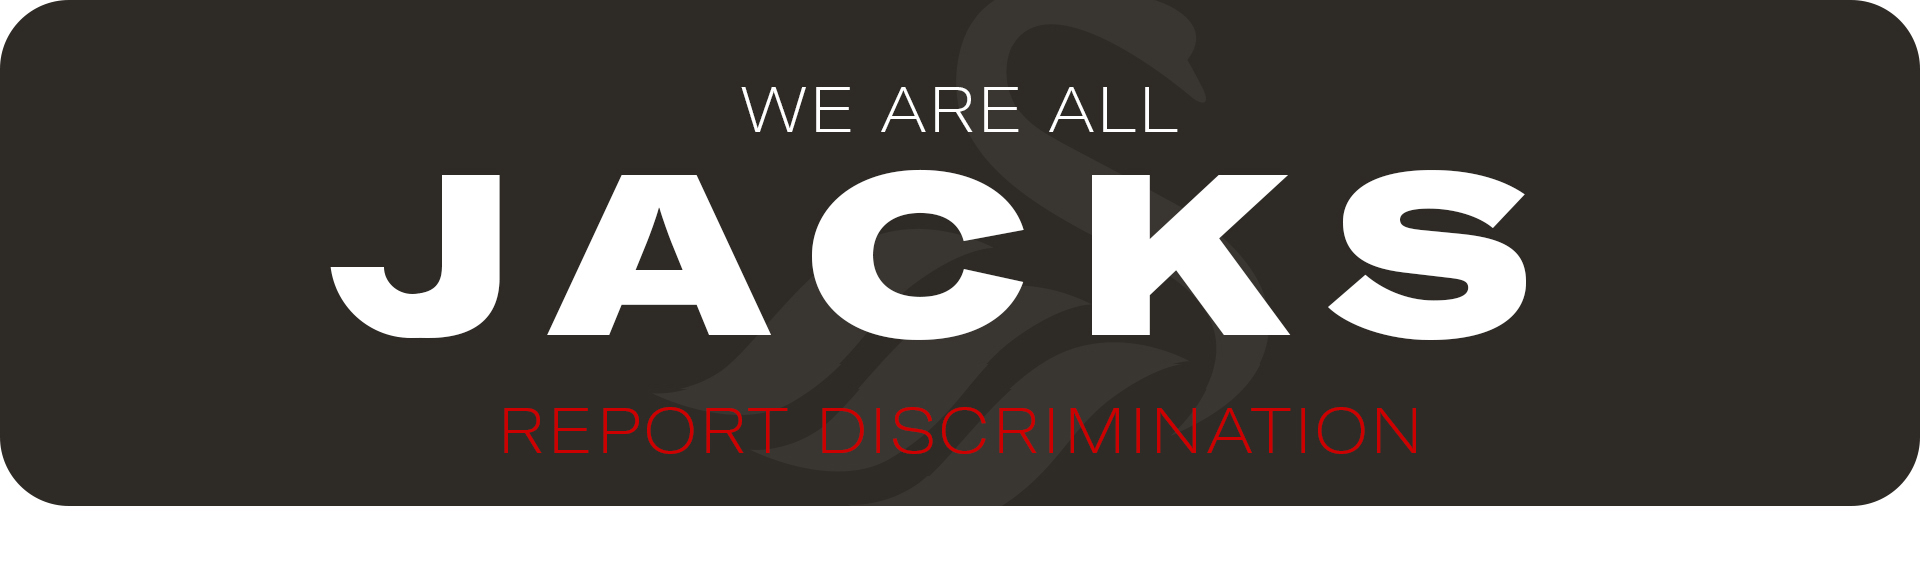 We are all Jacks, Report Discrimination.